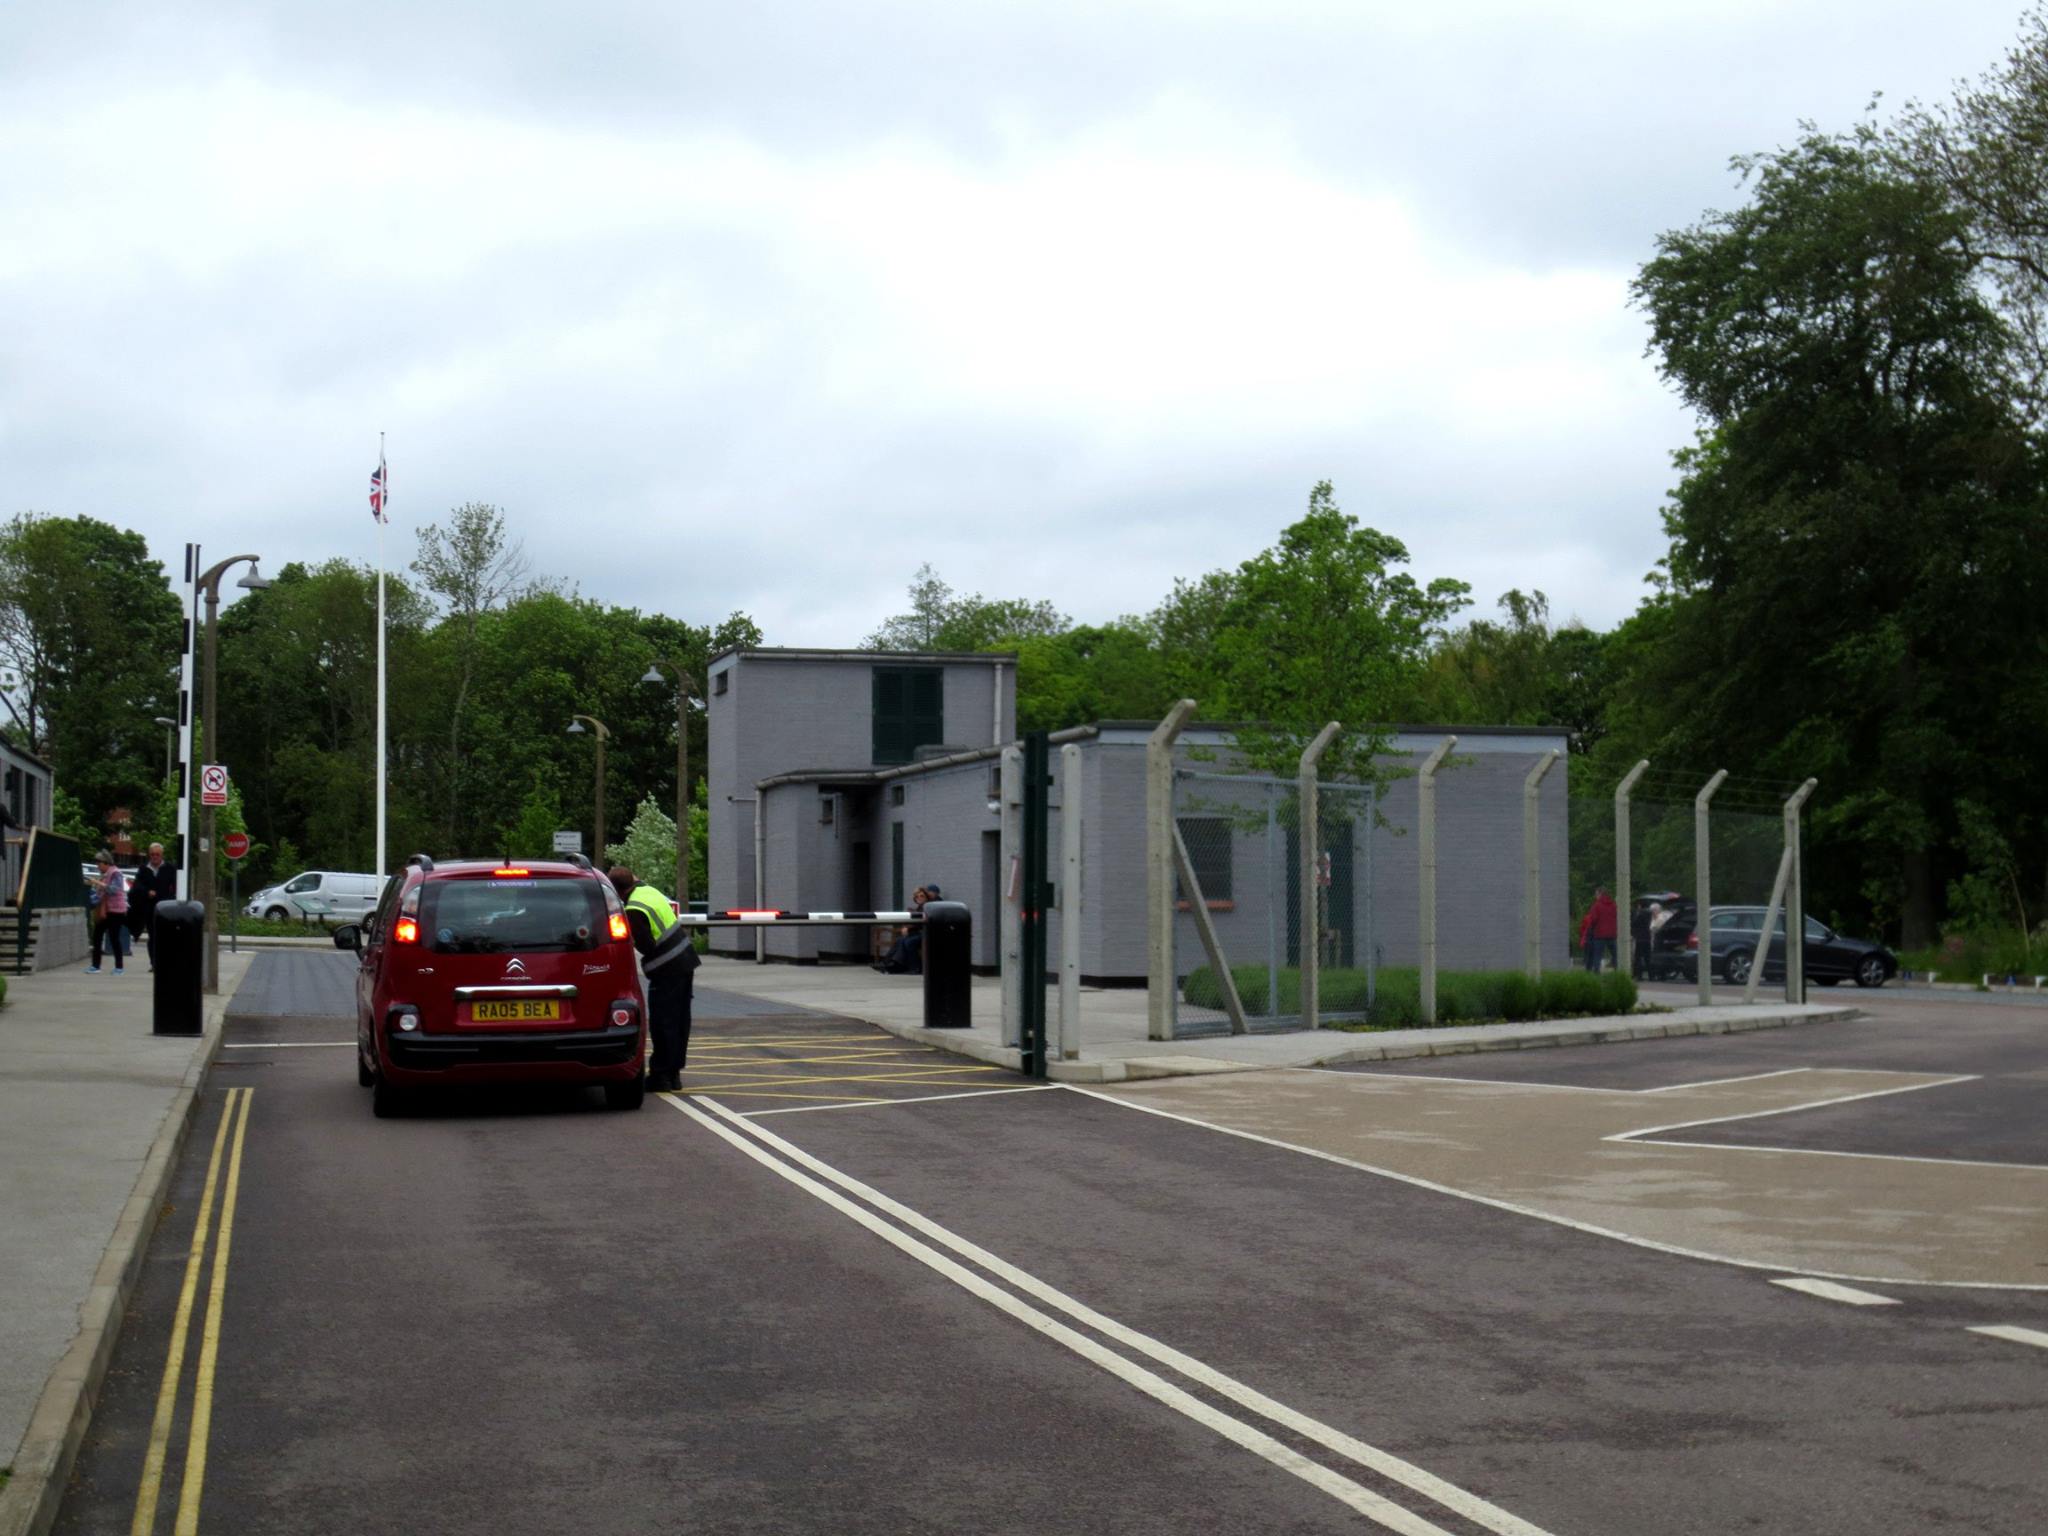 Bletchley Park Gates